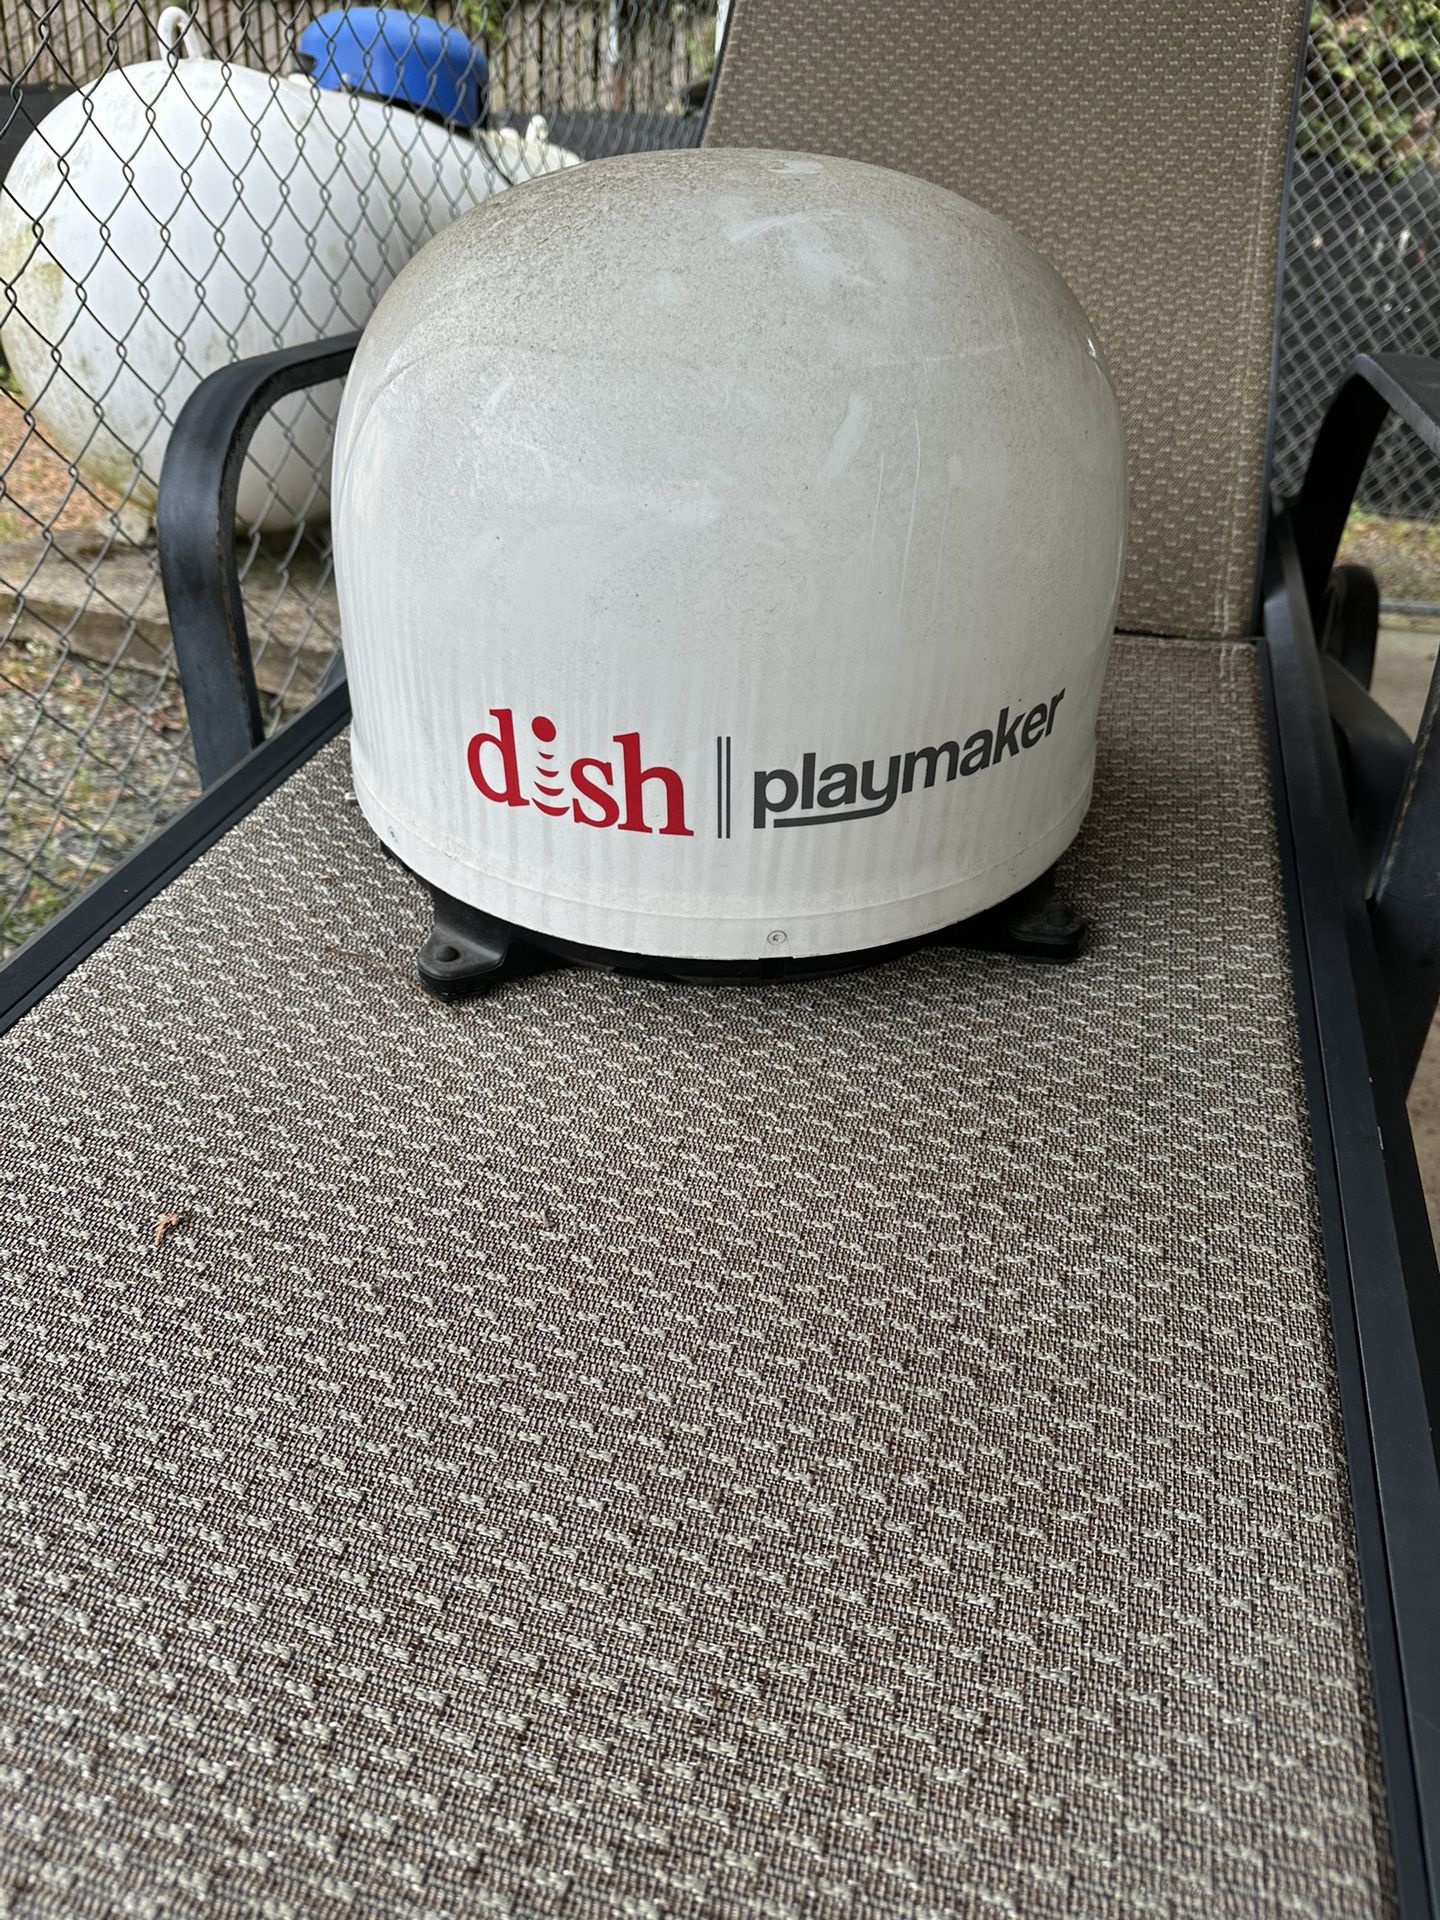 Dish Playmaker Satellite Antenna 